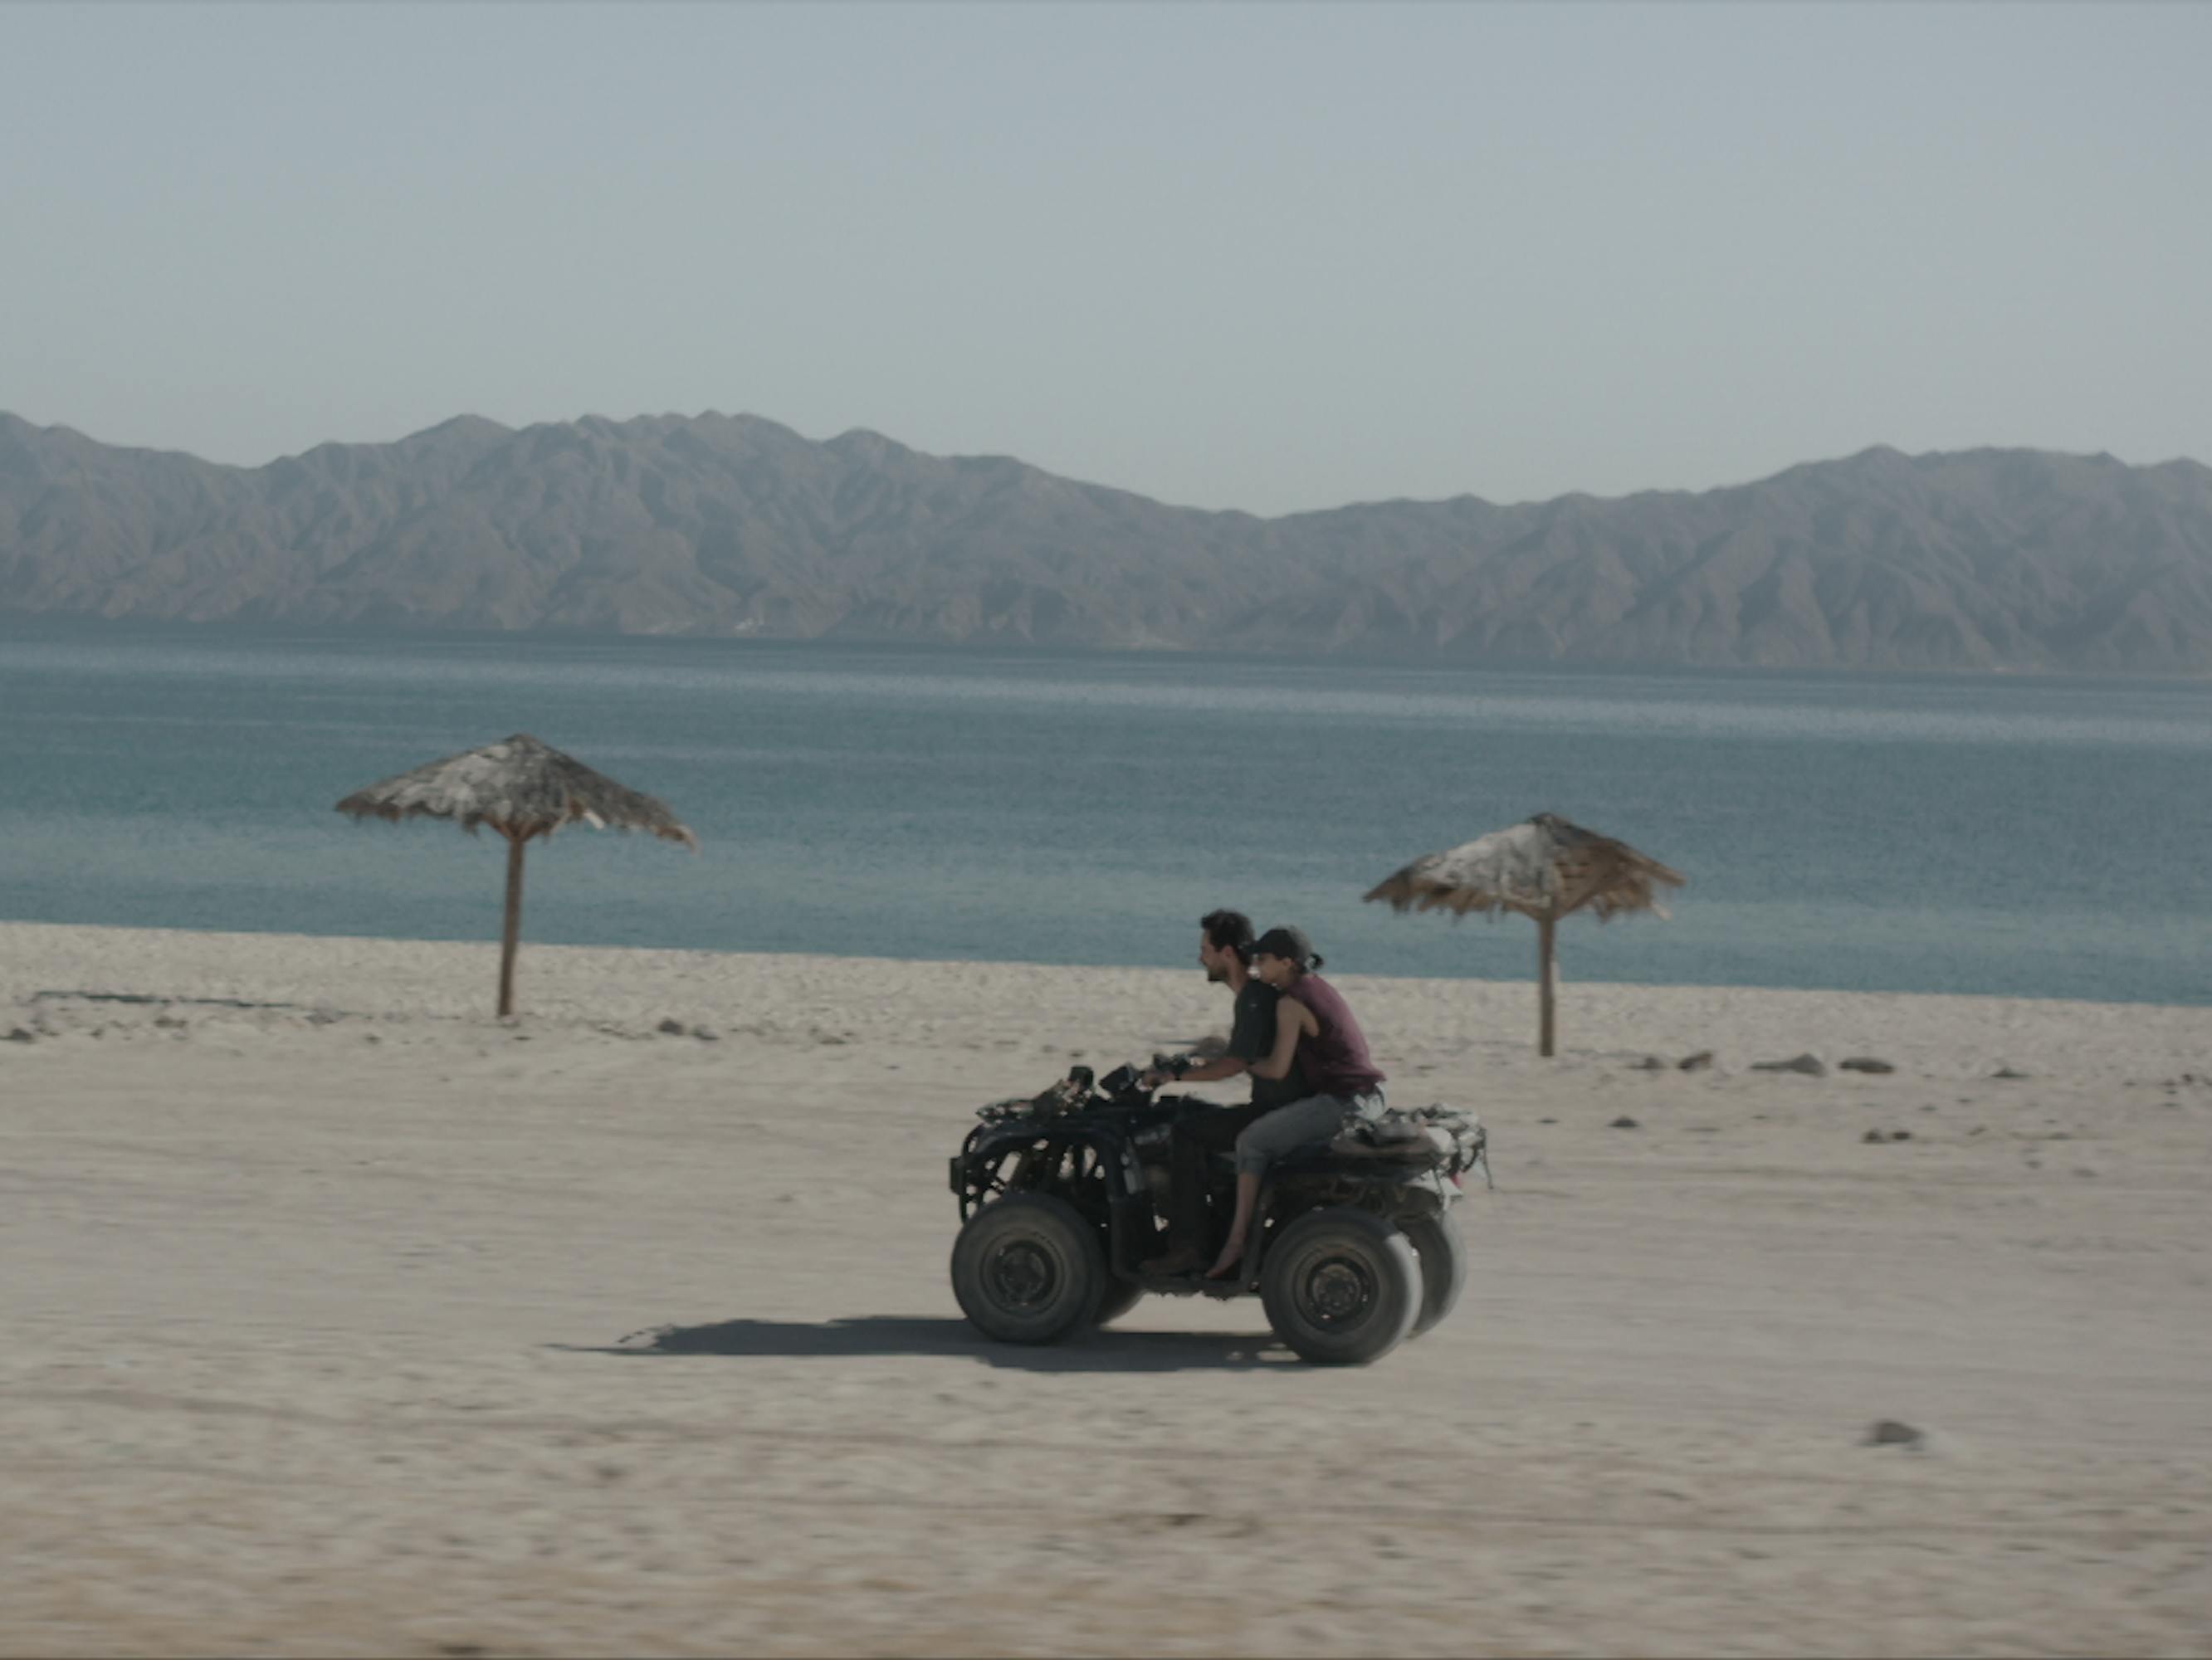 The couple from Camino a Marte race down an empty beach on an ATV four wheeler. 